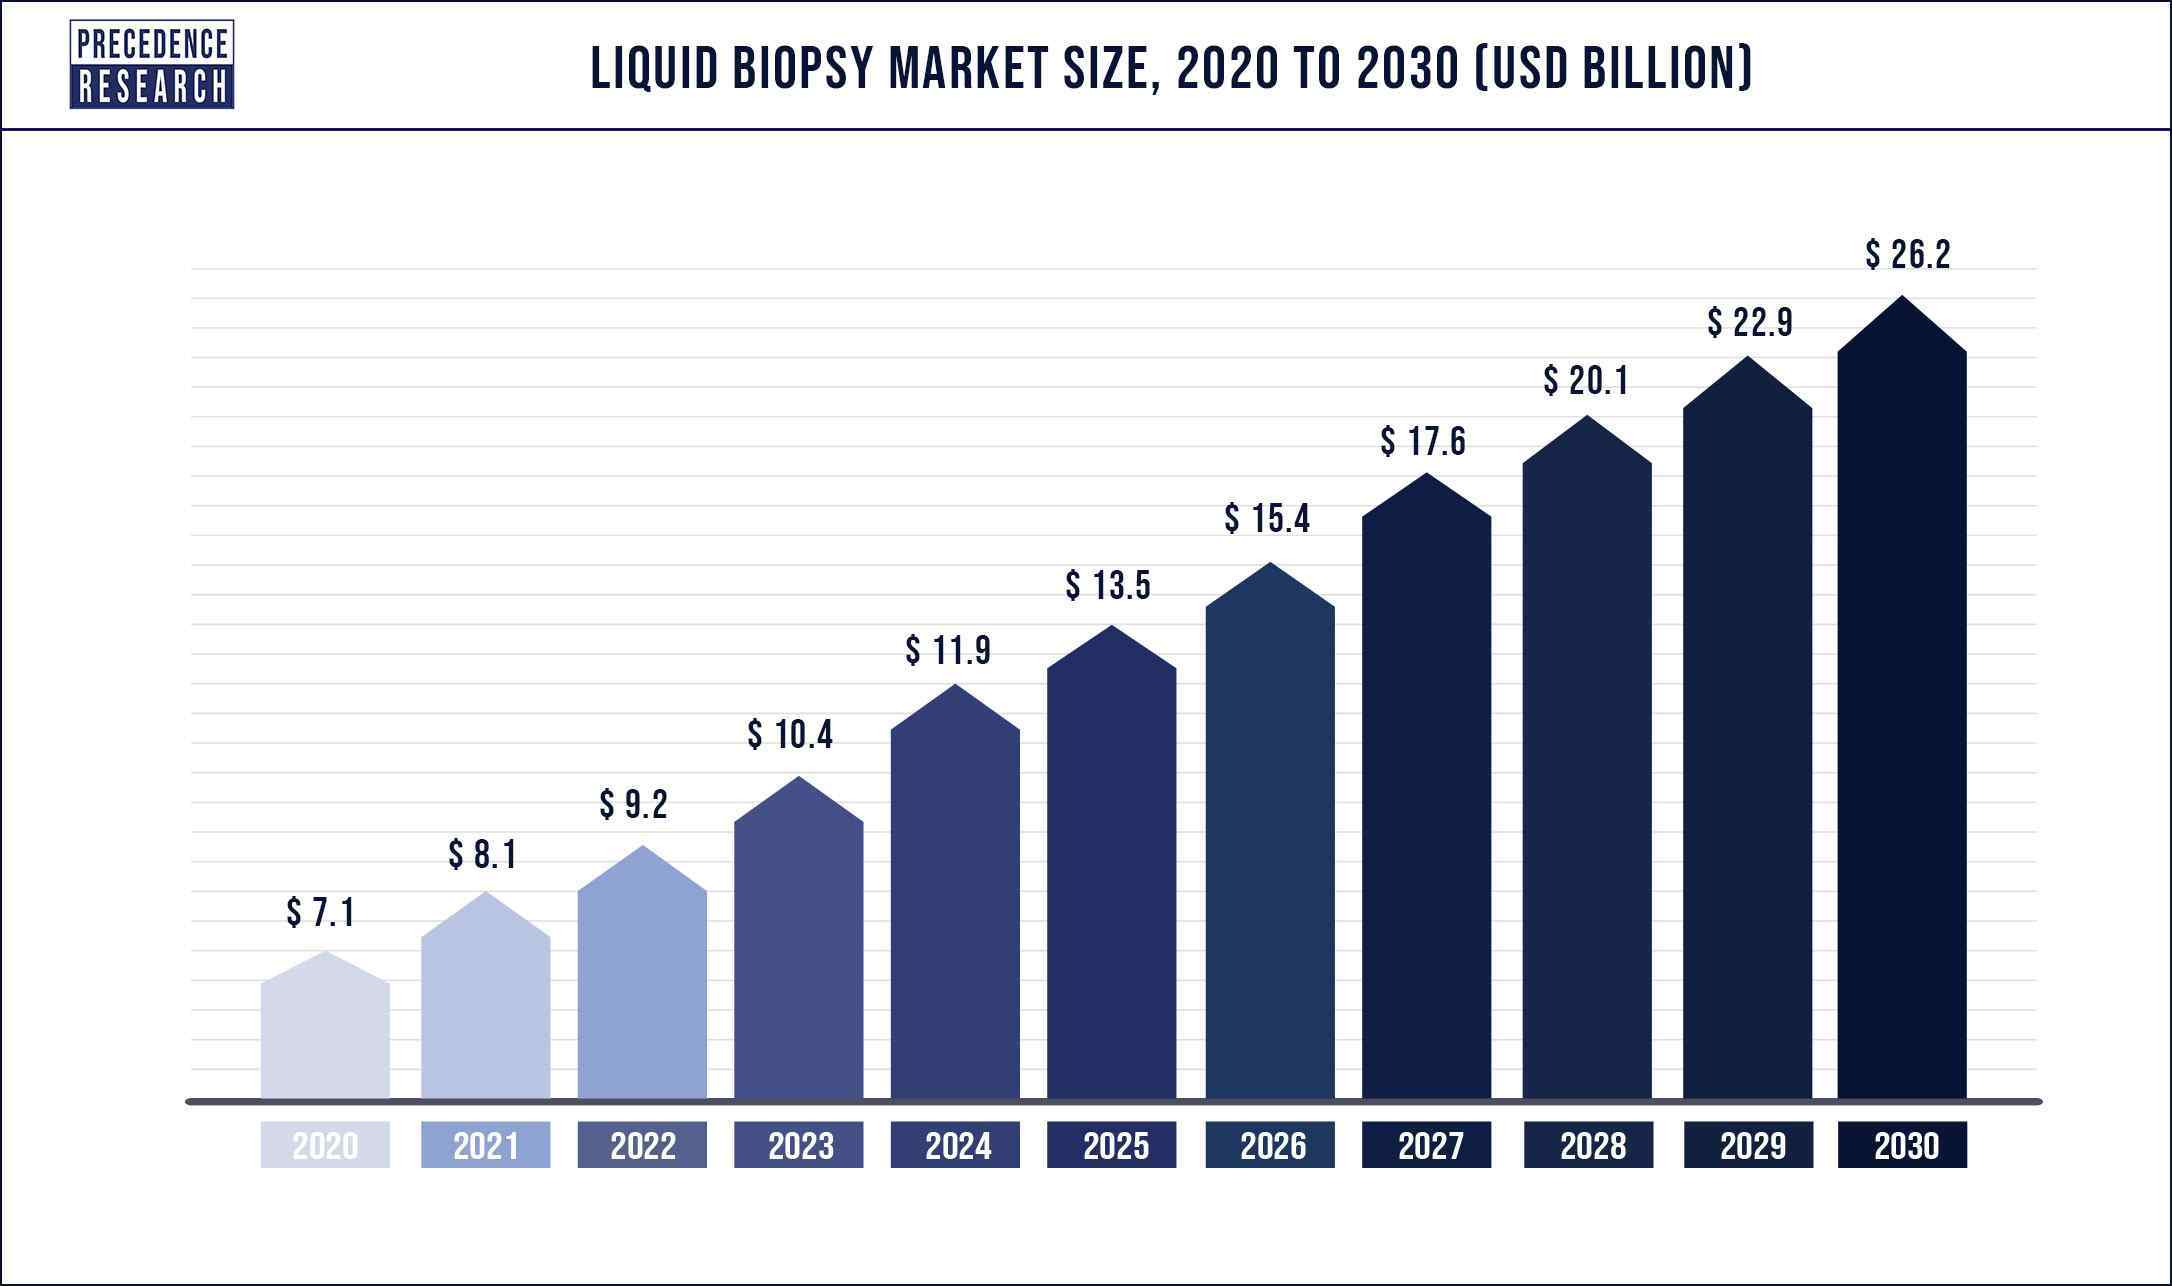 Liquid Biopsy Market Size, 2020 to 2030